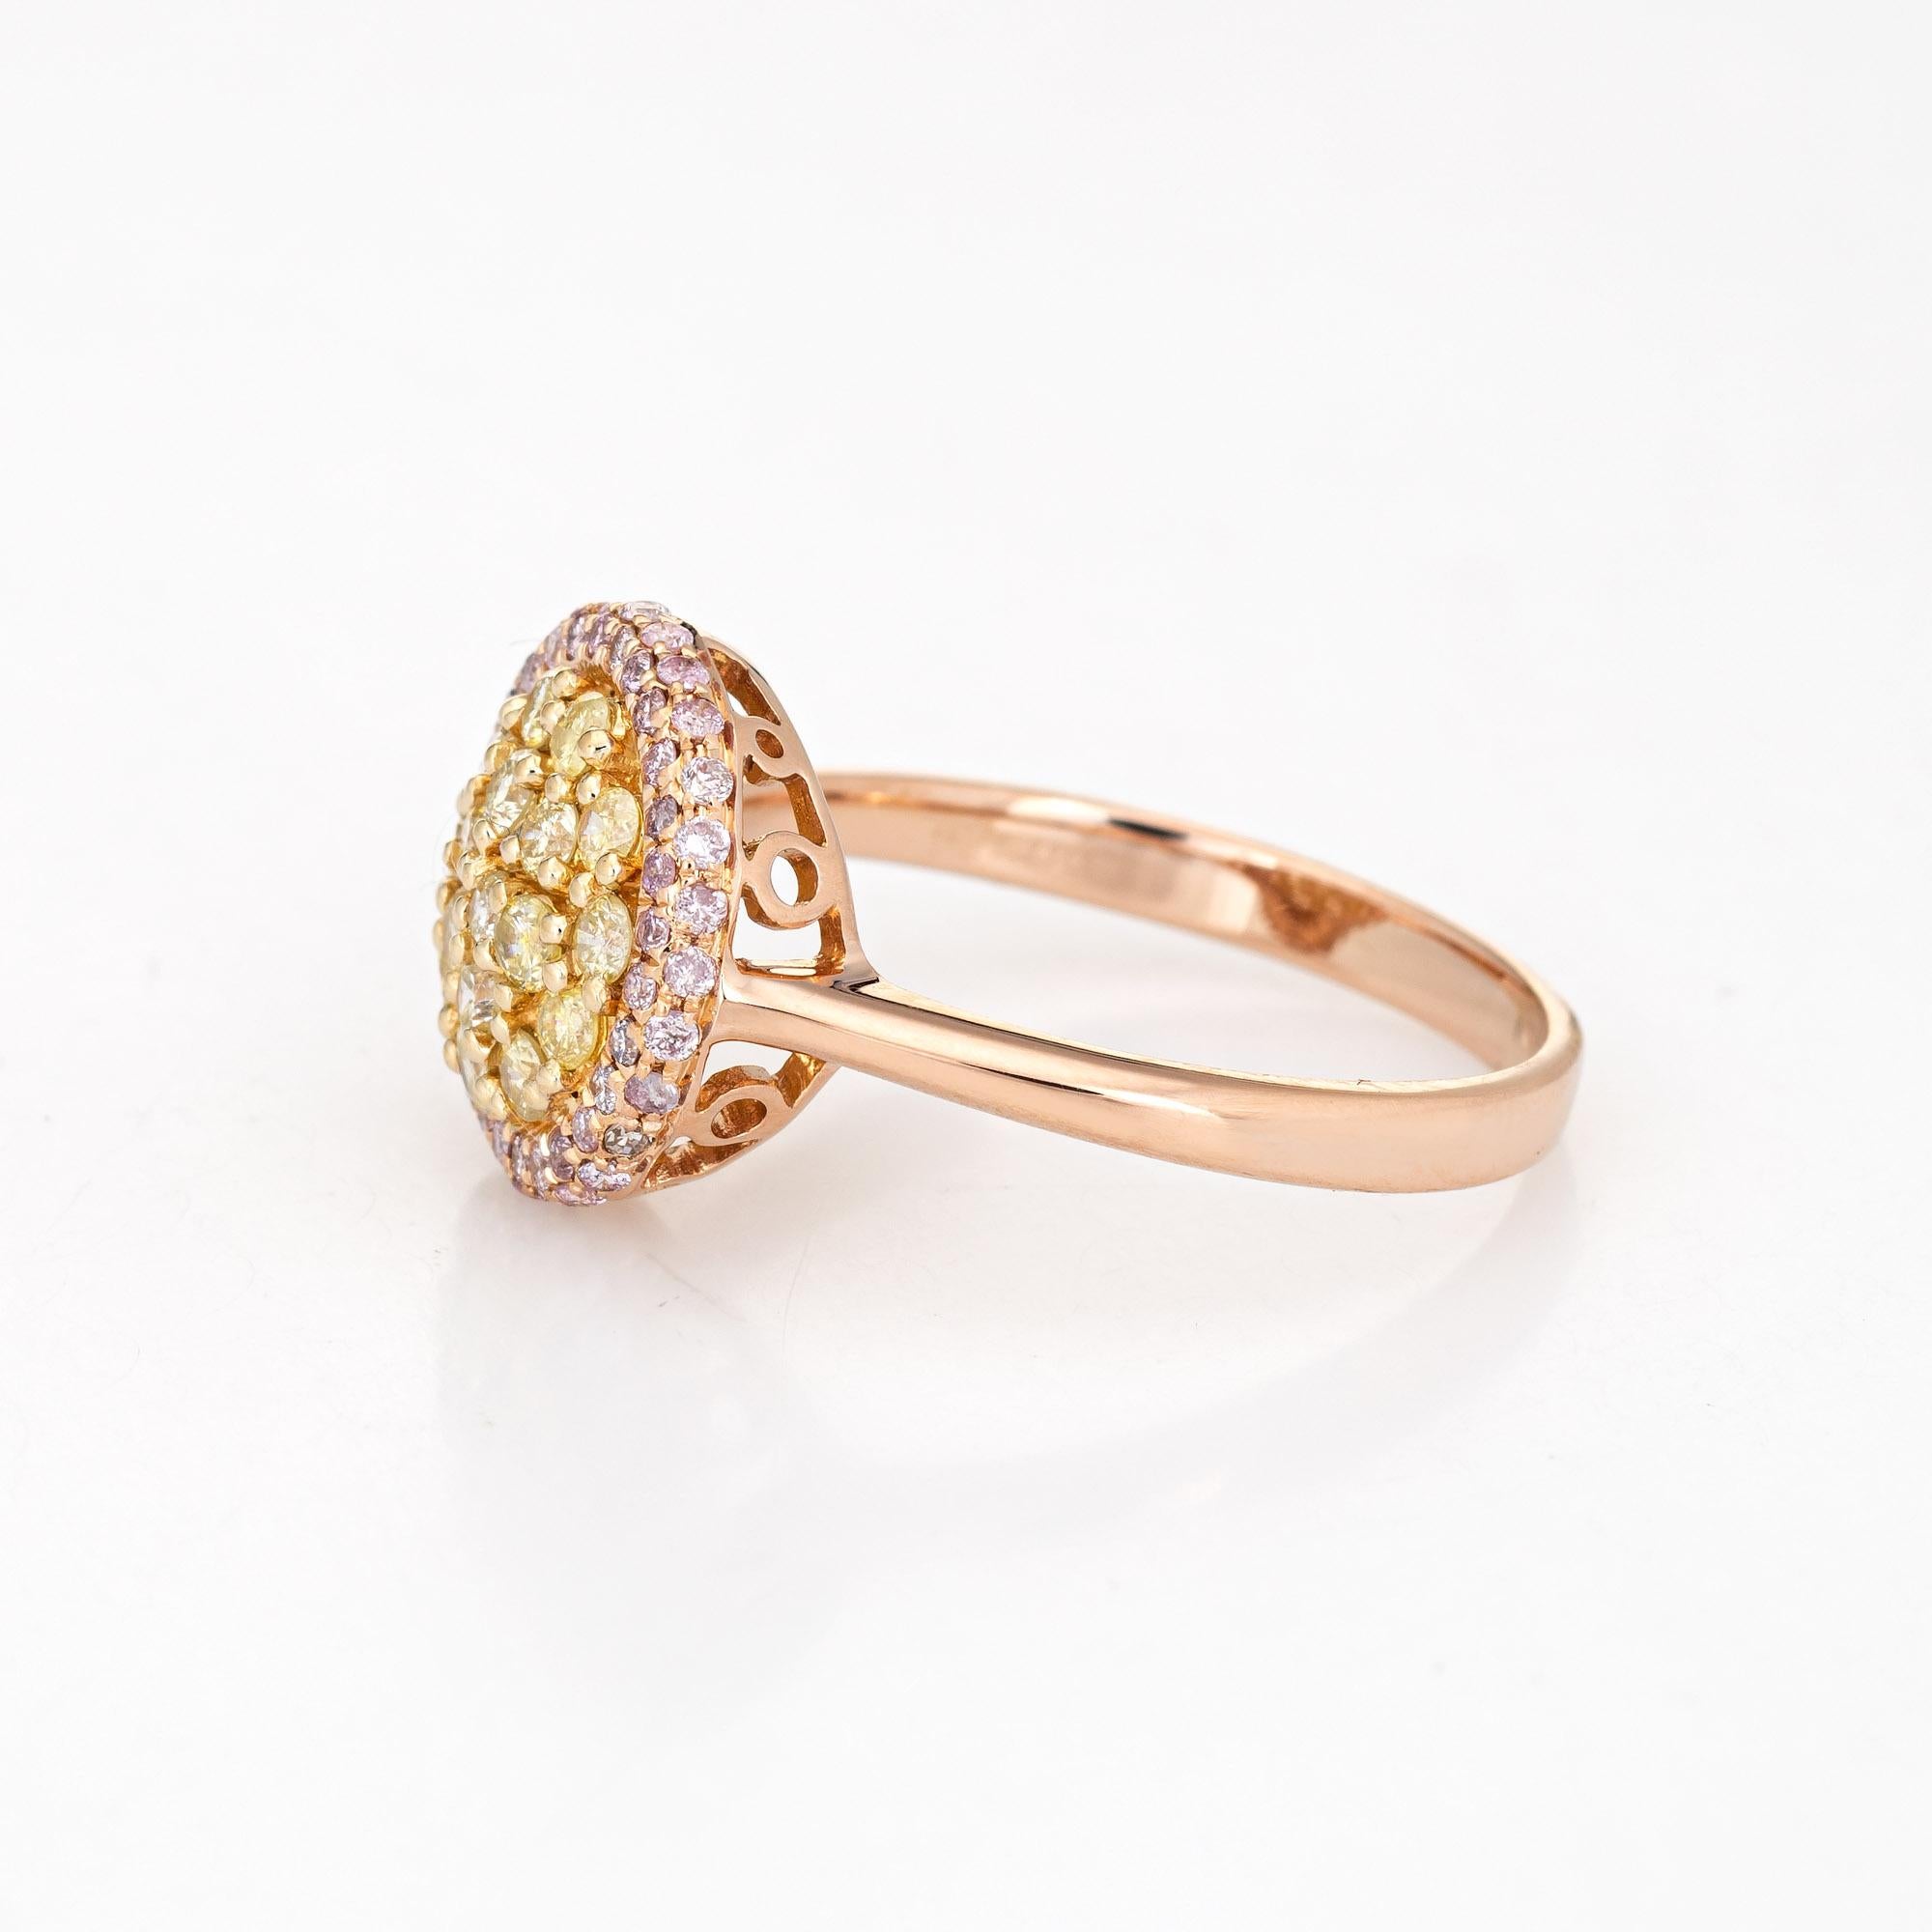 Round Cut Pink Yellow Diamond Halo Ring Estate 18 Karat Rose Gold Fine Colored Gemstones For Sale